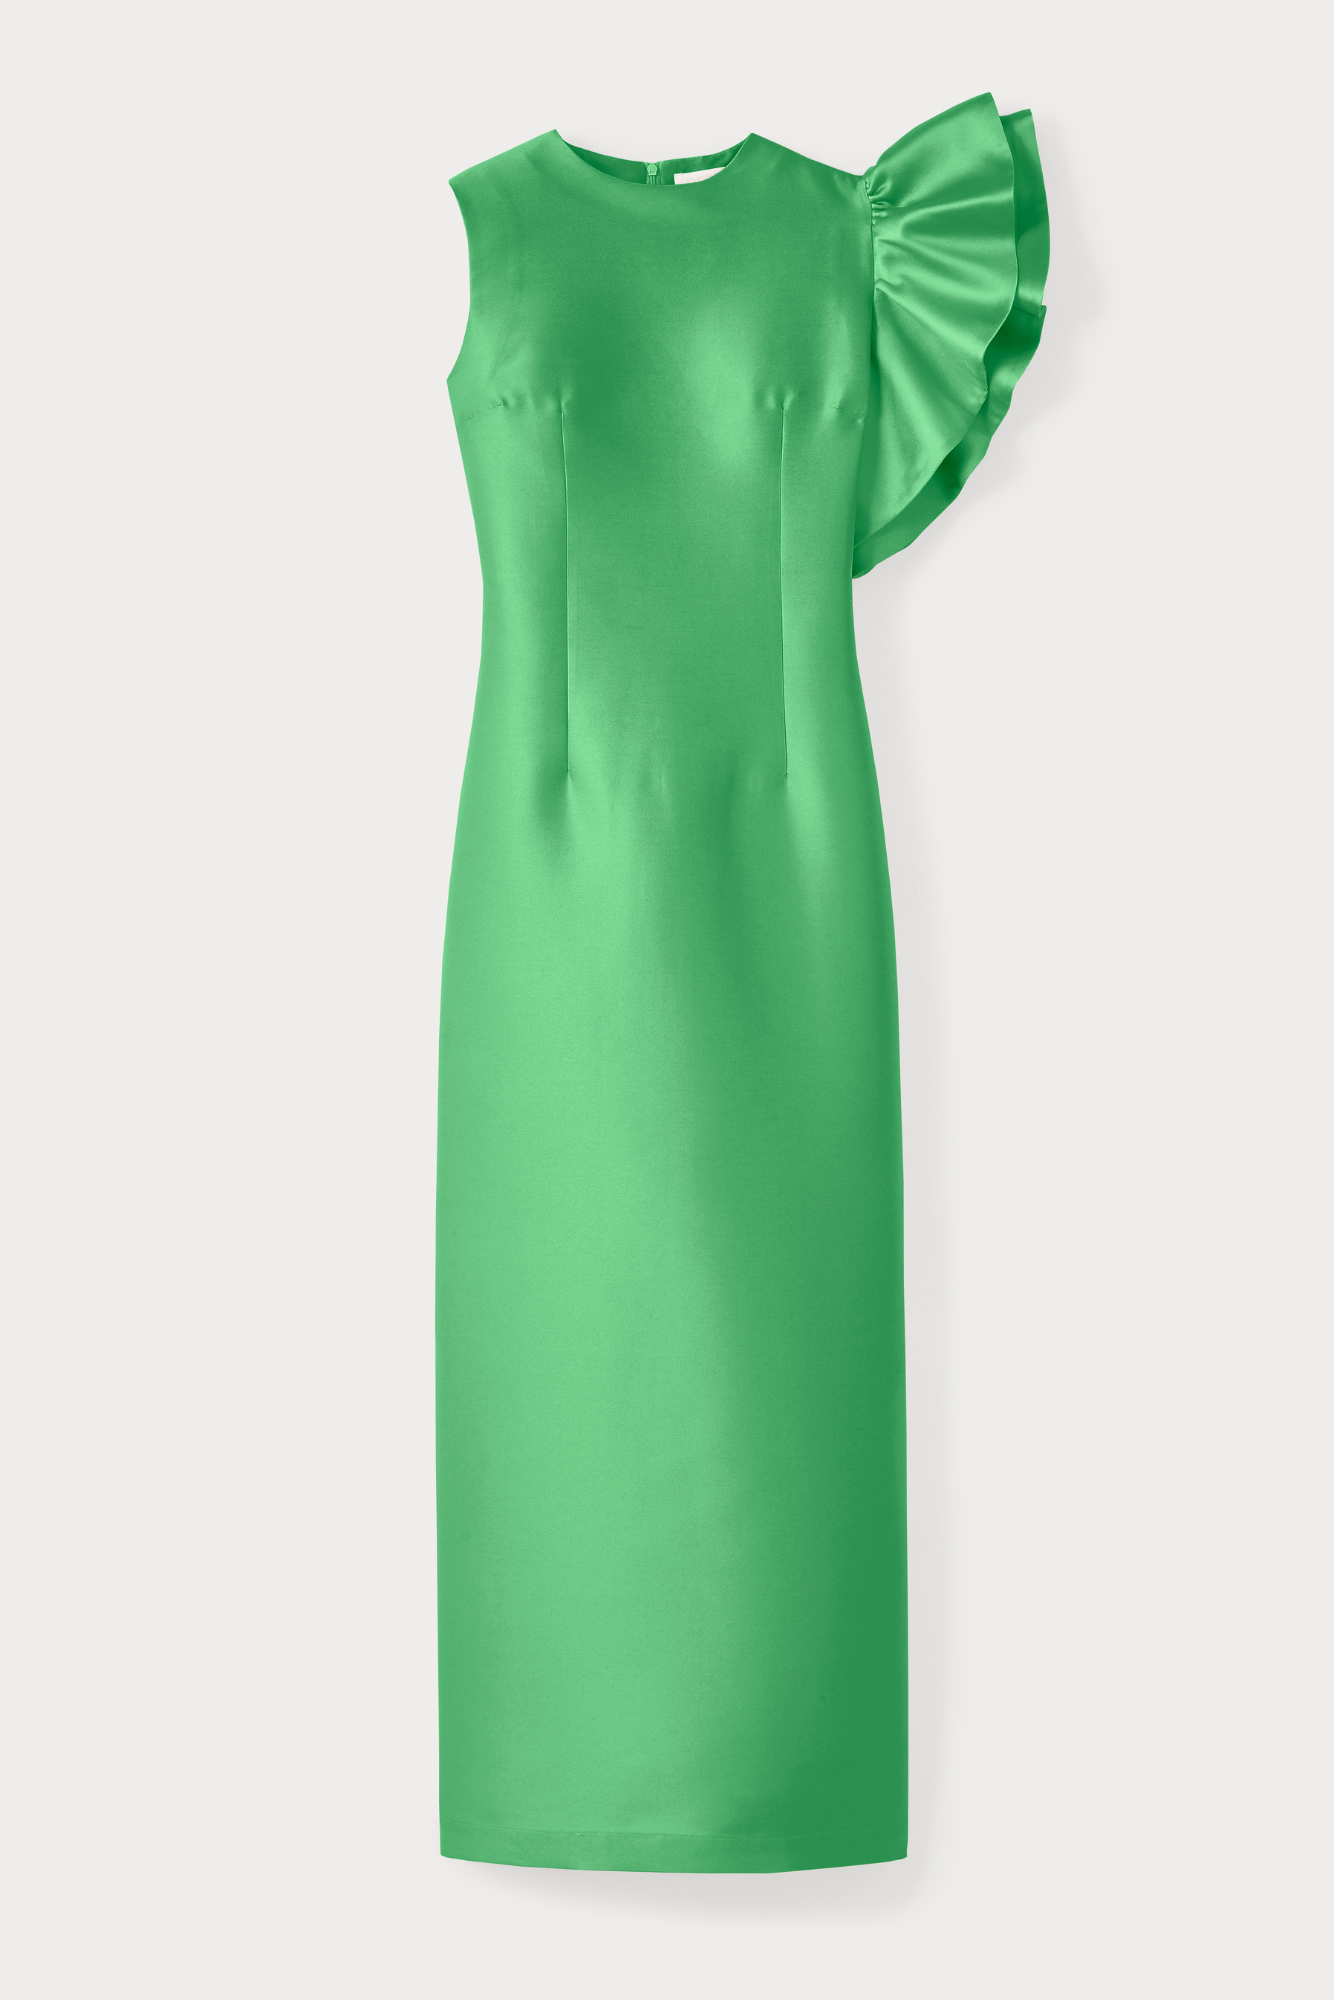 APPLE GREEN Satin Dress with Asymmetric Ruffle Detail